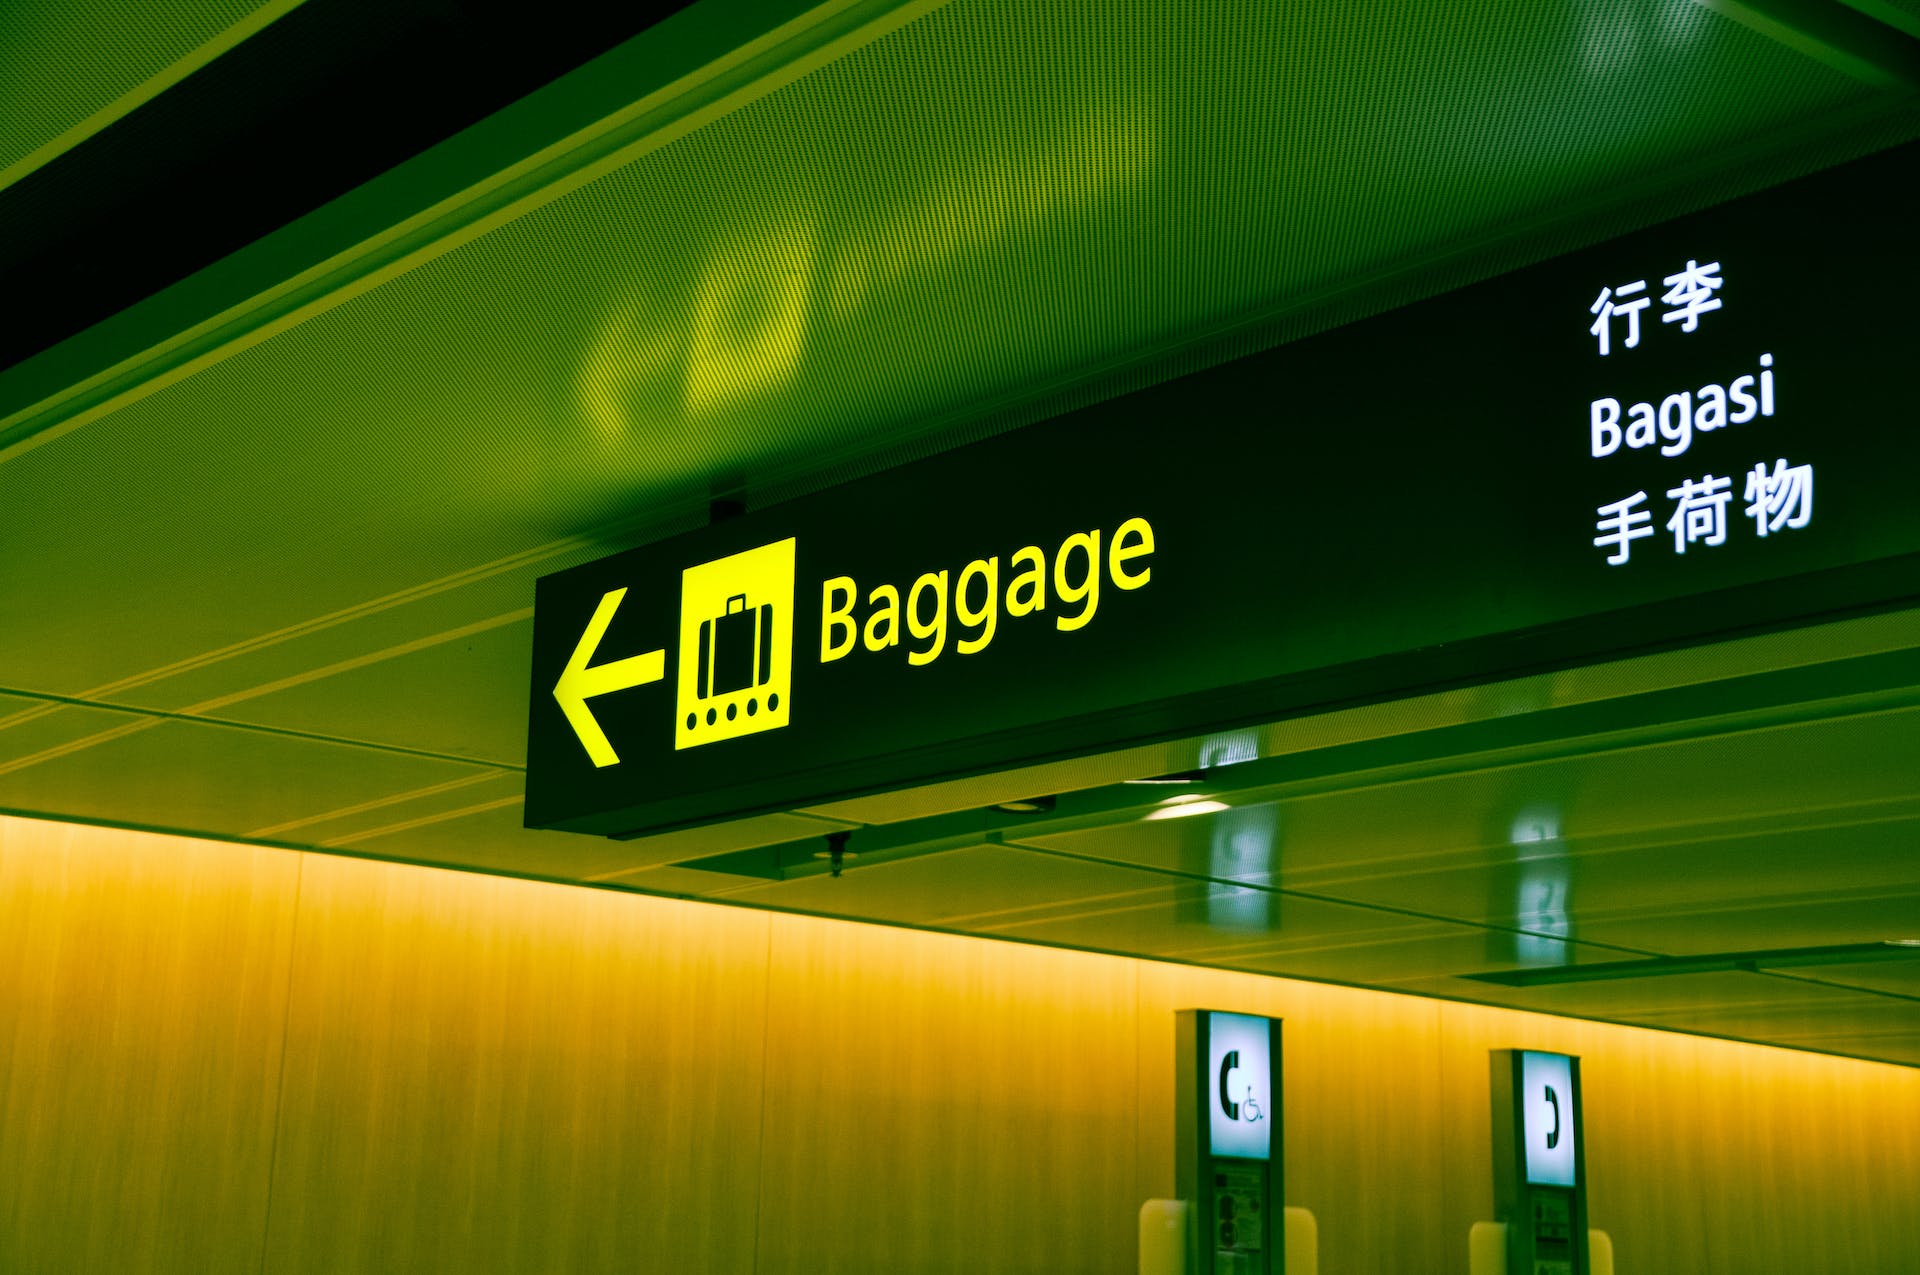 Baggage sign at an airport | Source: Pexels